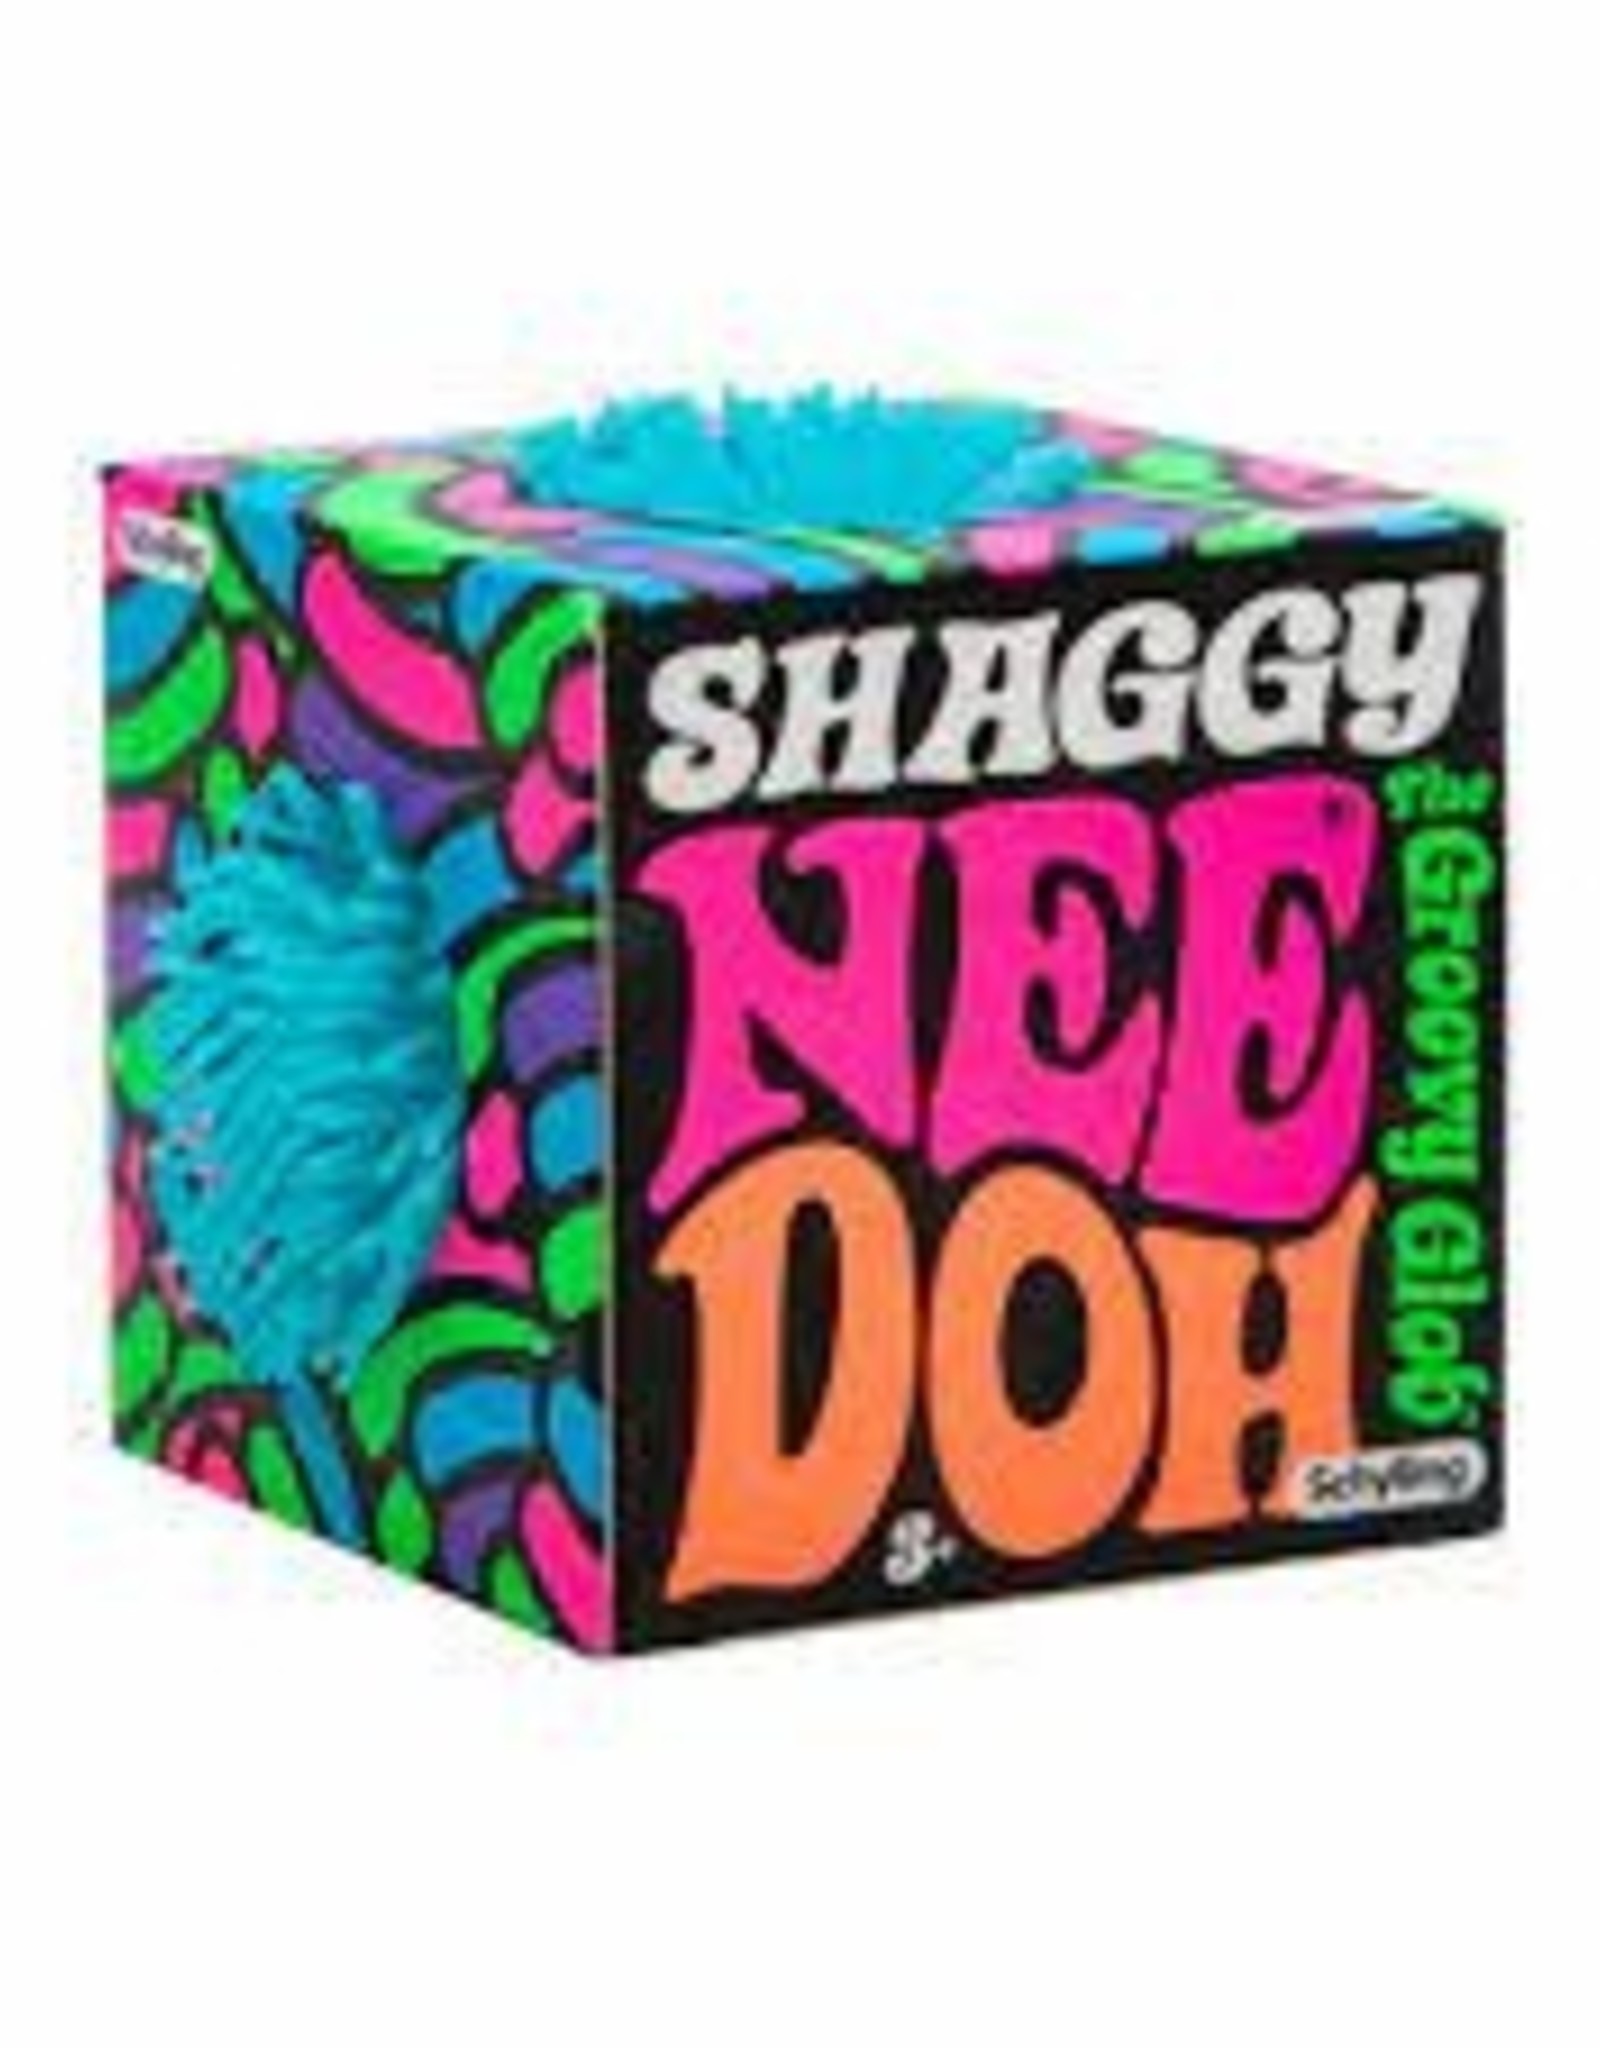 Kids Schylling - Shaggy Groovy Glob Nee Doh